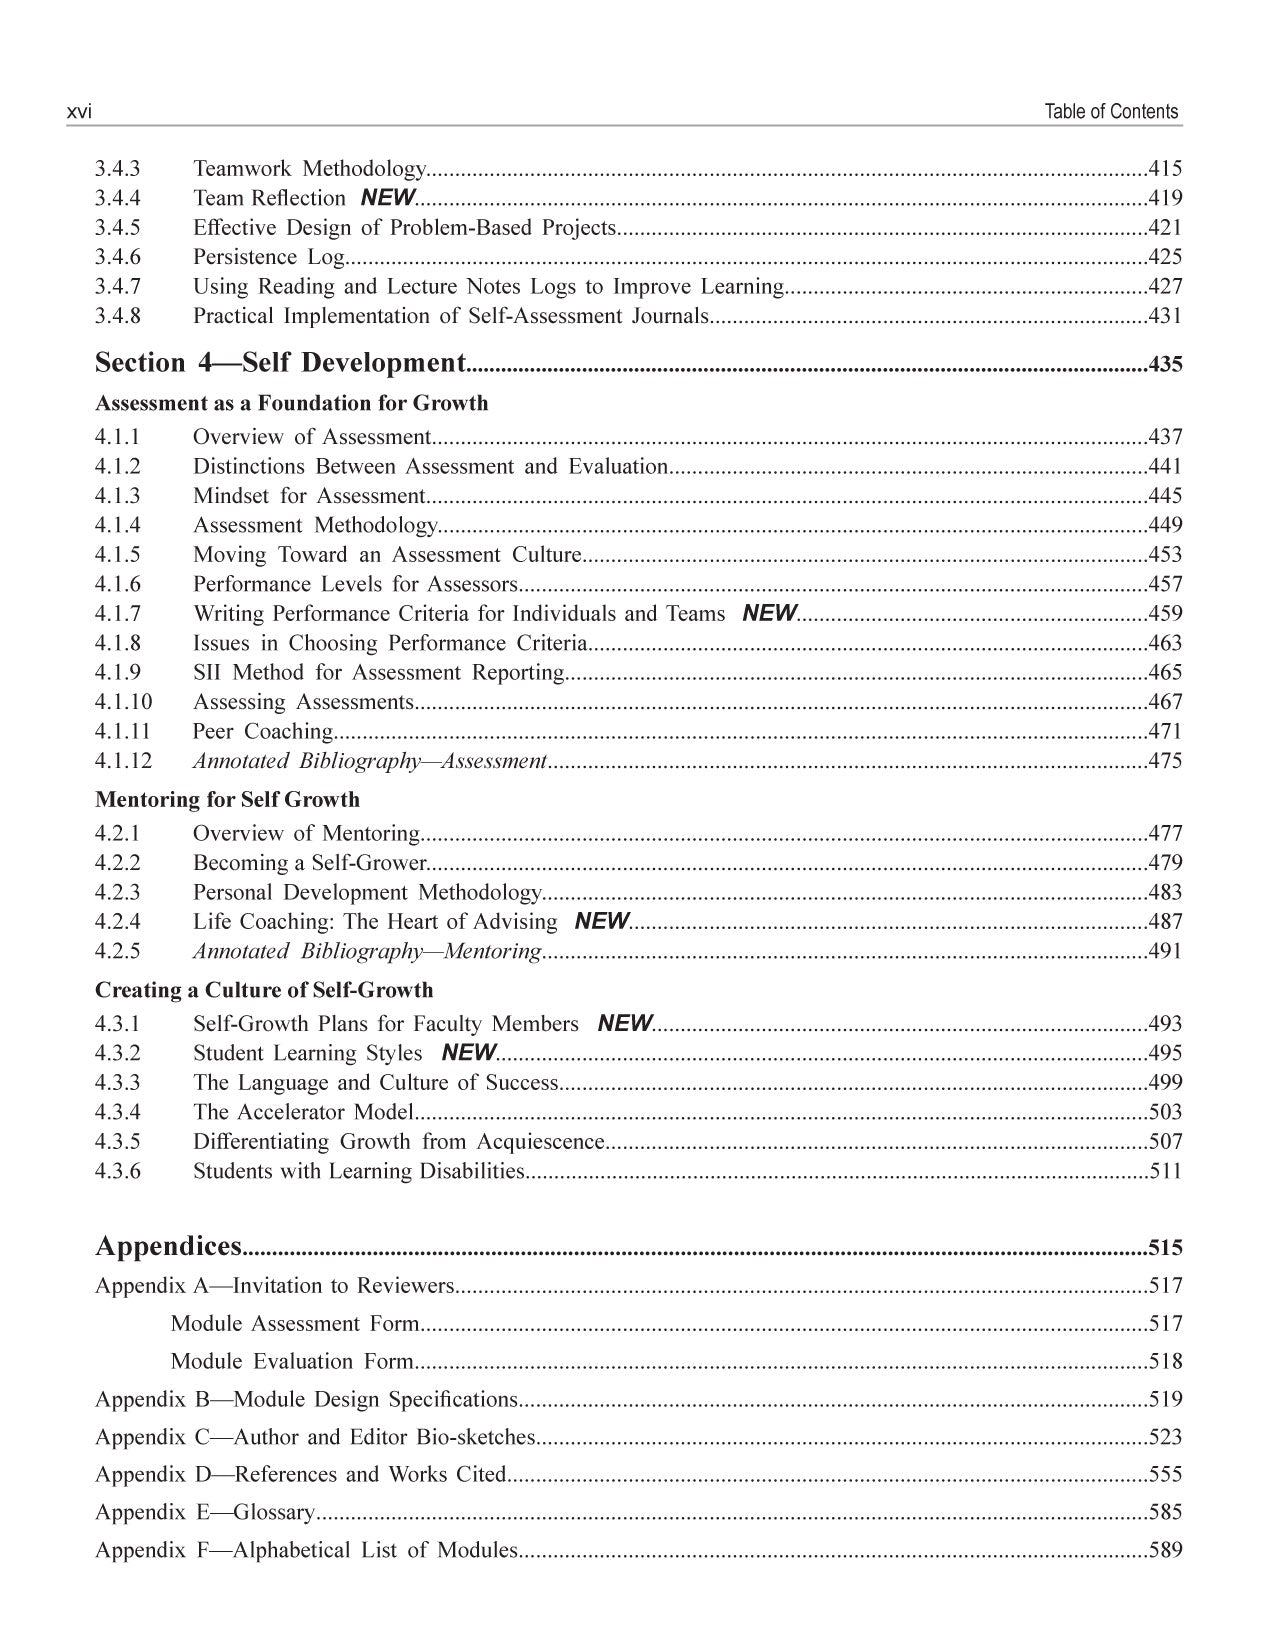 Faculty Guidebook, 4th Edition